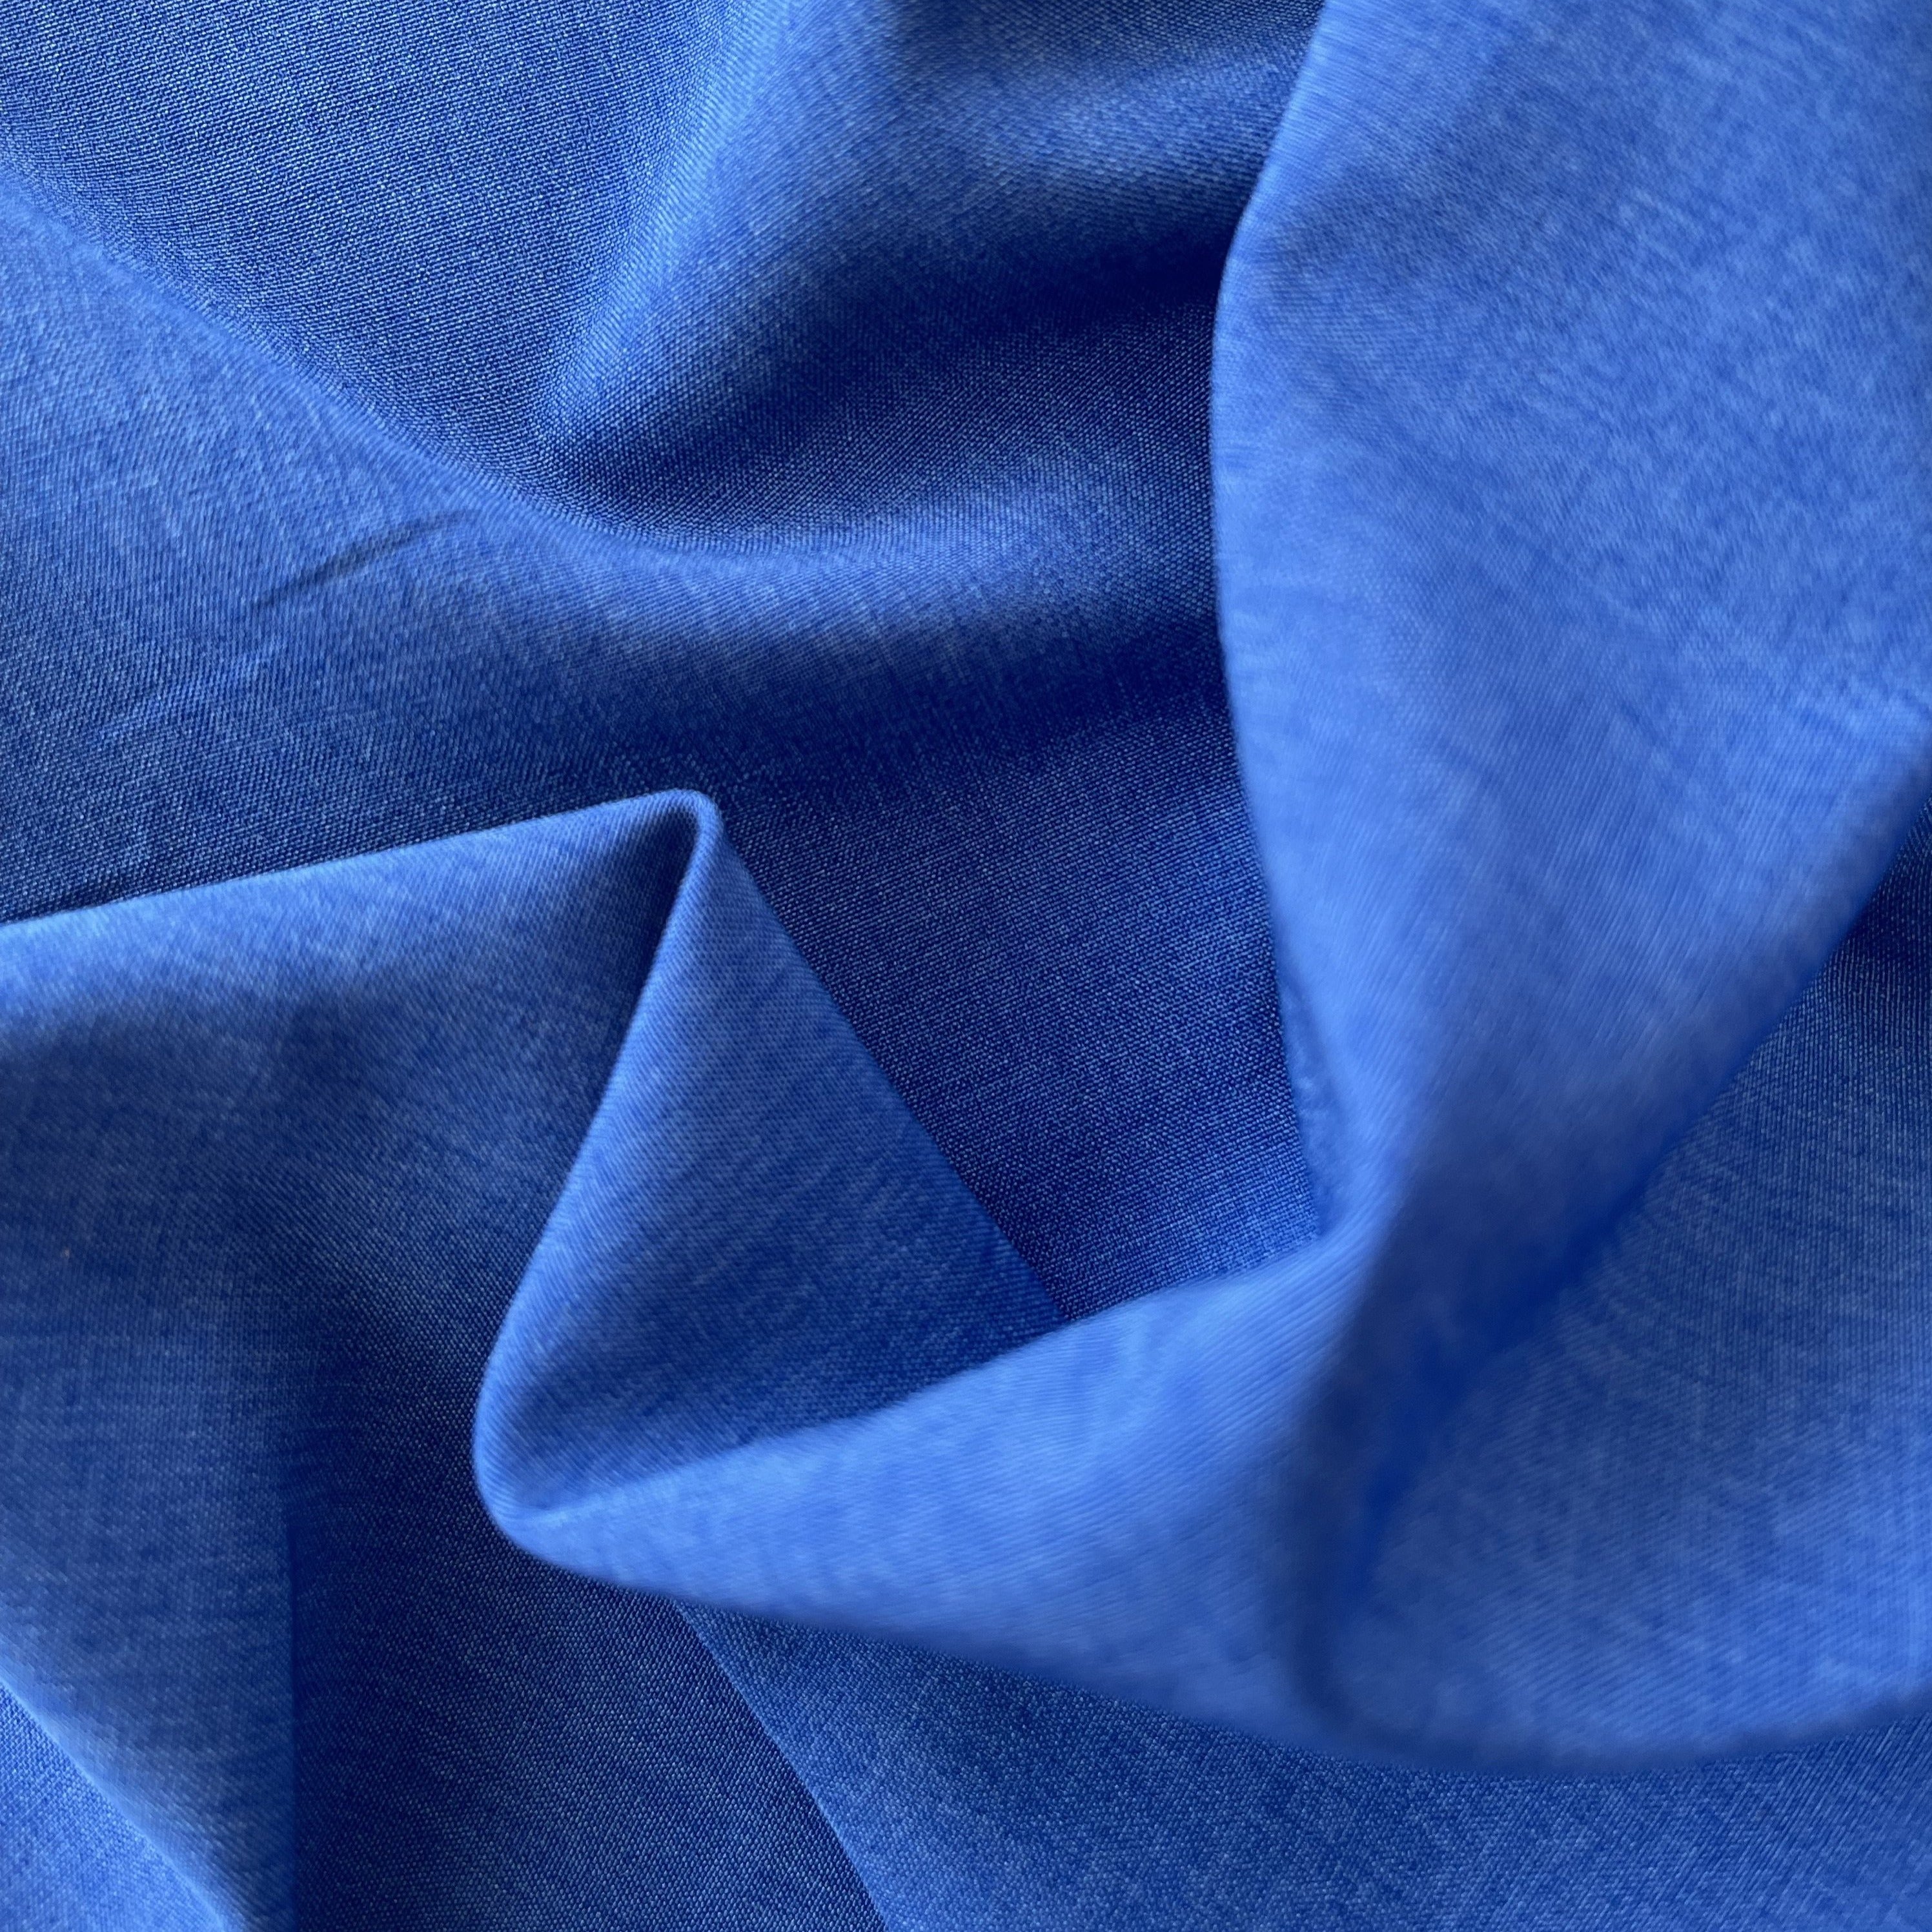 Stretch Woven - Brilliant Blue Linen Look